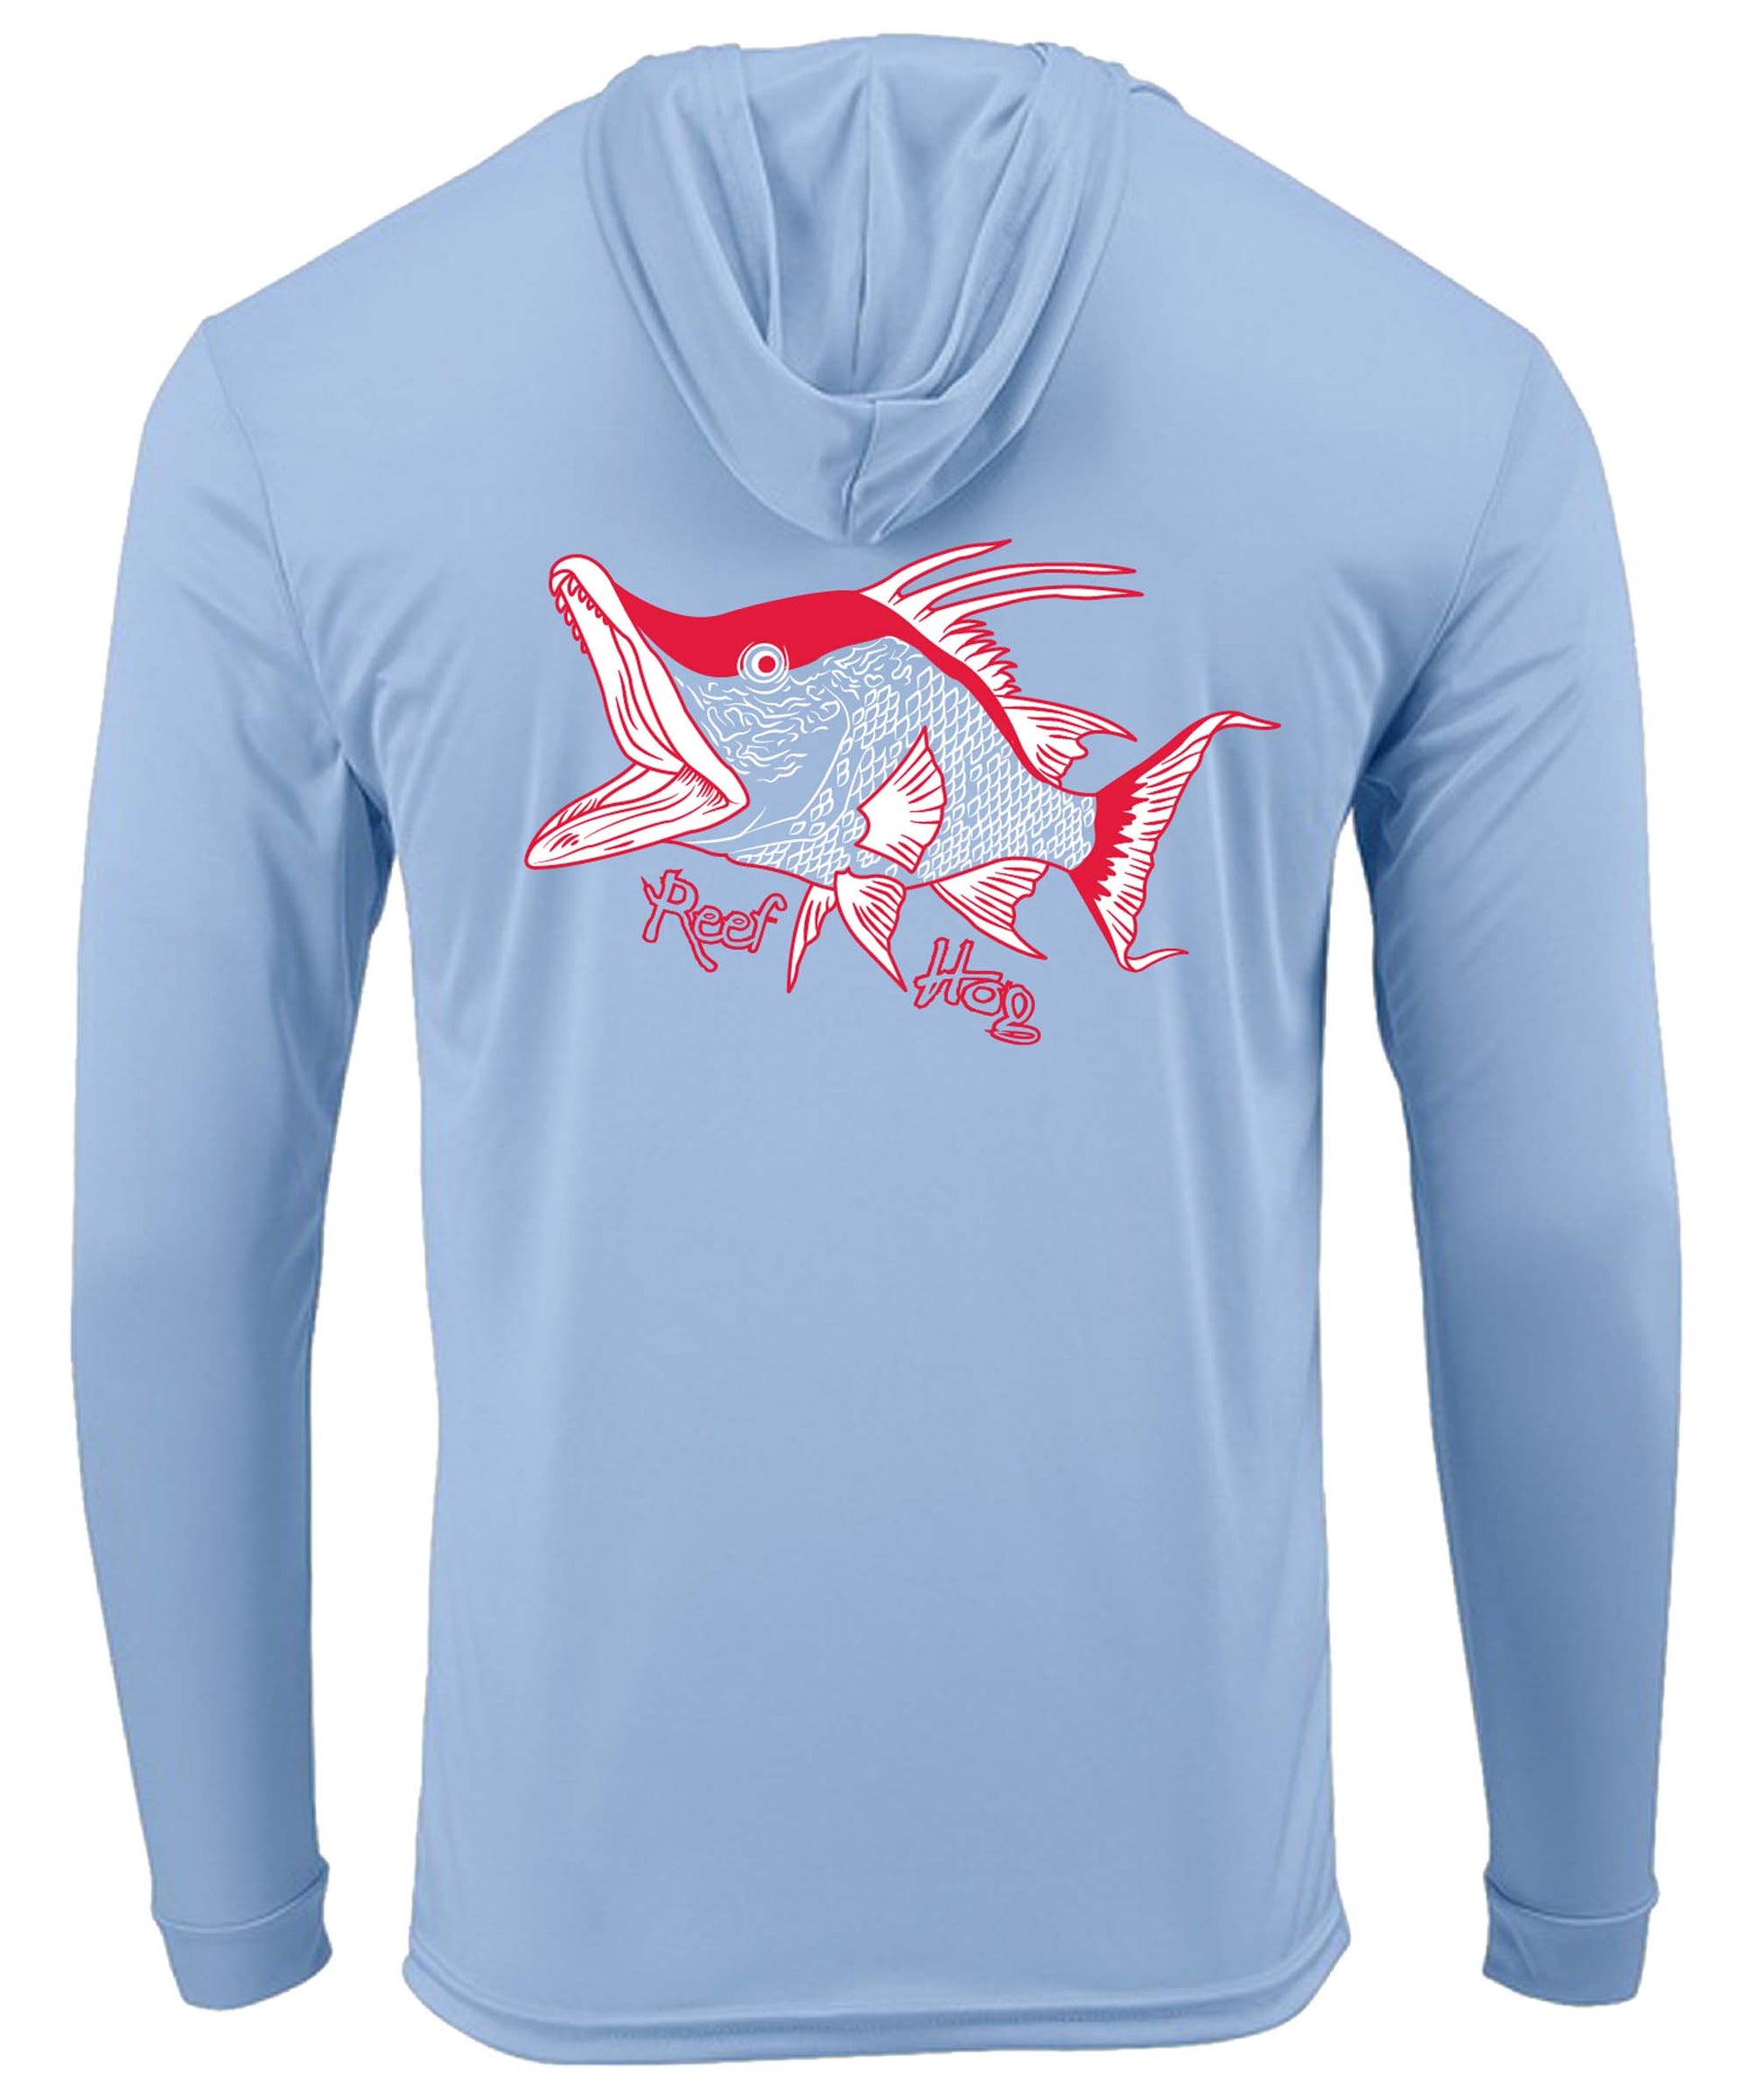 Reel Life Men’s Hooded Fishing Shirt XL Long Sleeve Light Hoodie Teal Blue  Aqua